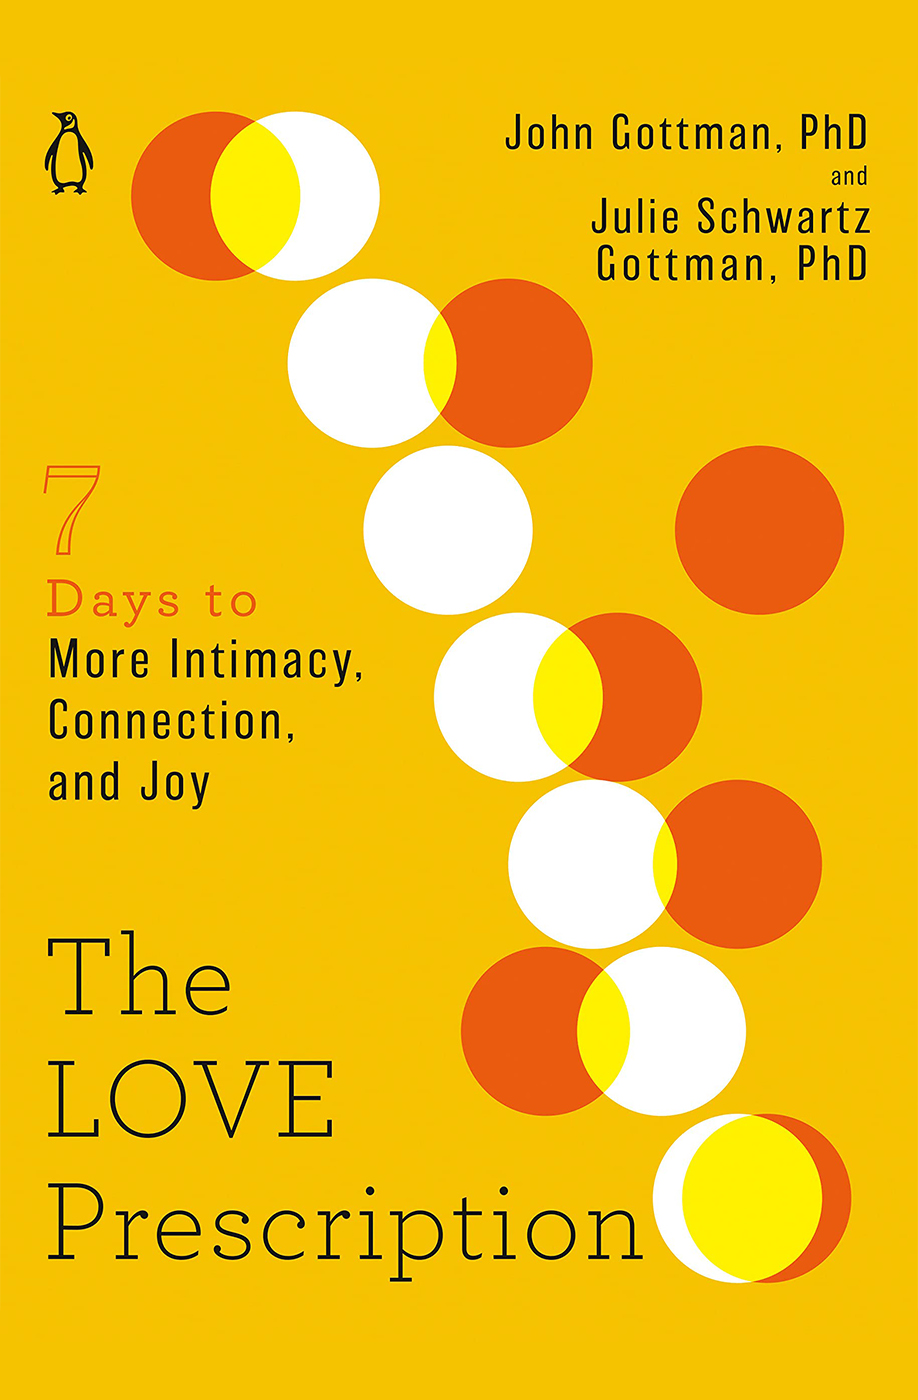 The Love Prescription by Dr. John Gottman and Dr. Julie Schwartz Gottman